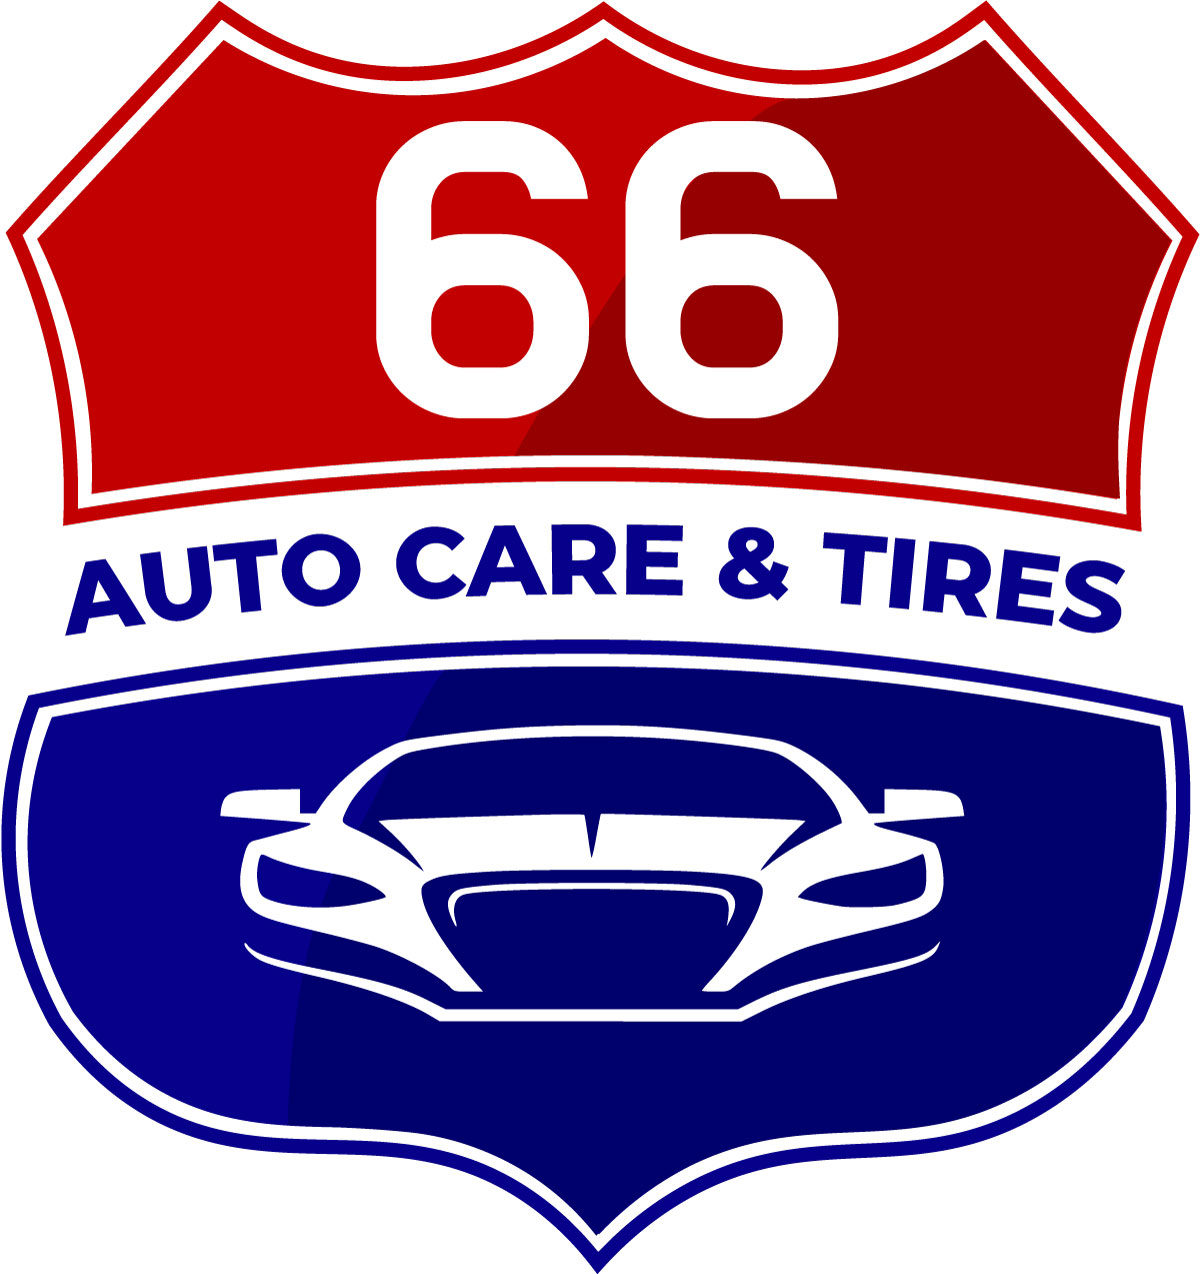 66 Auto Care & Tires